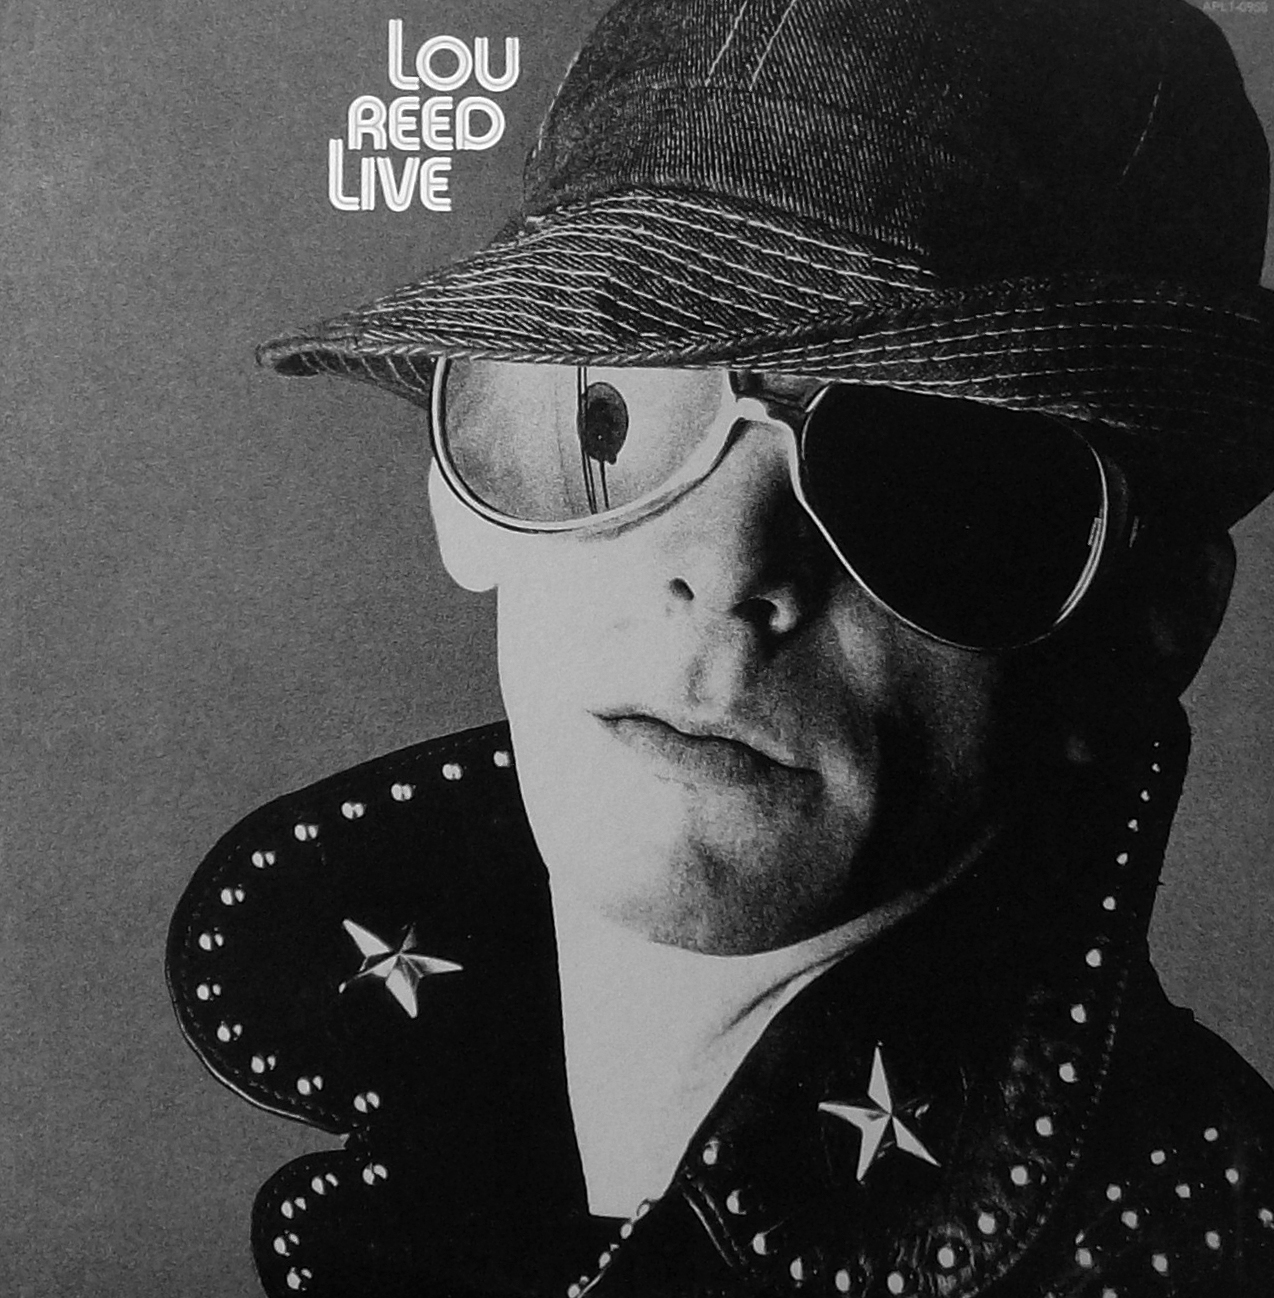 Ha muerto Lou Reed - Página 10 Lou-reed-live-cover